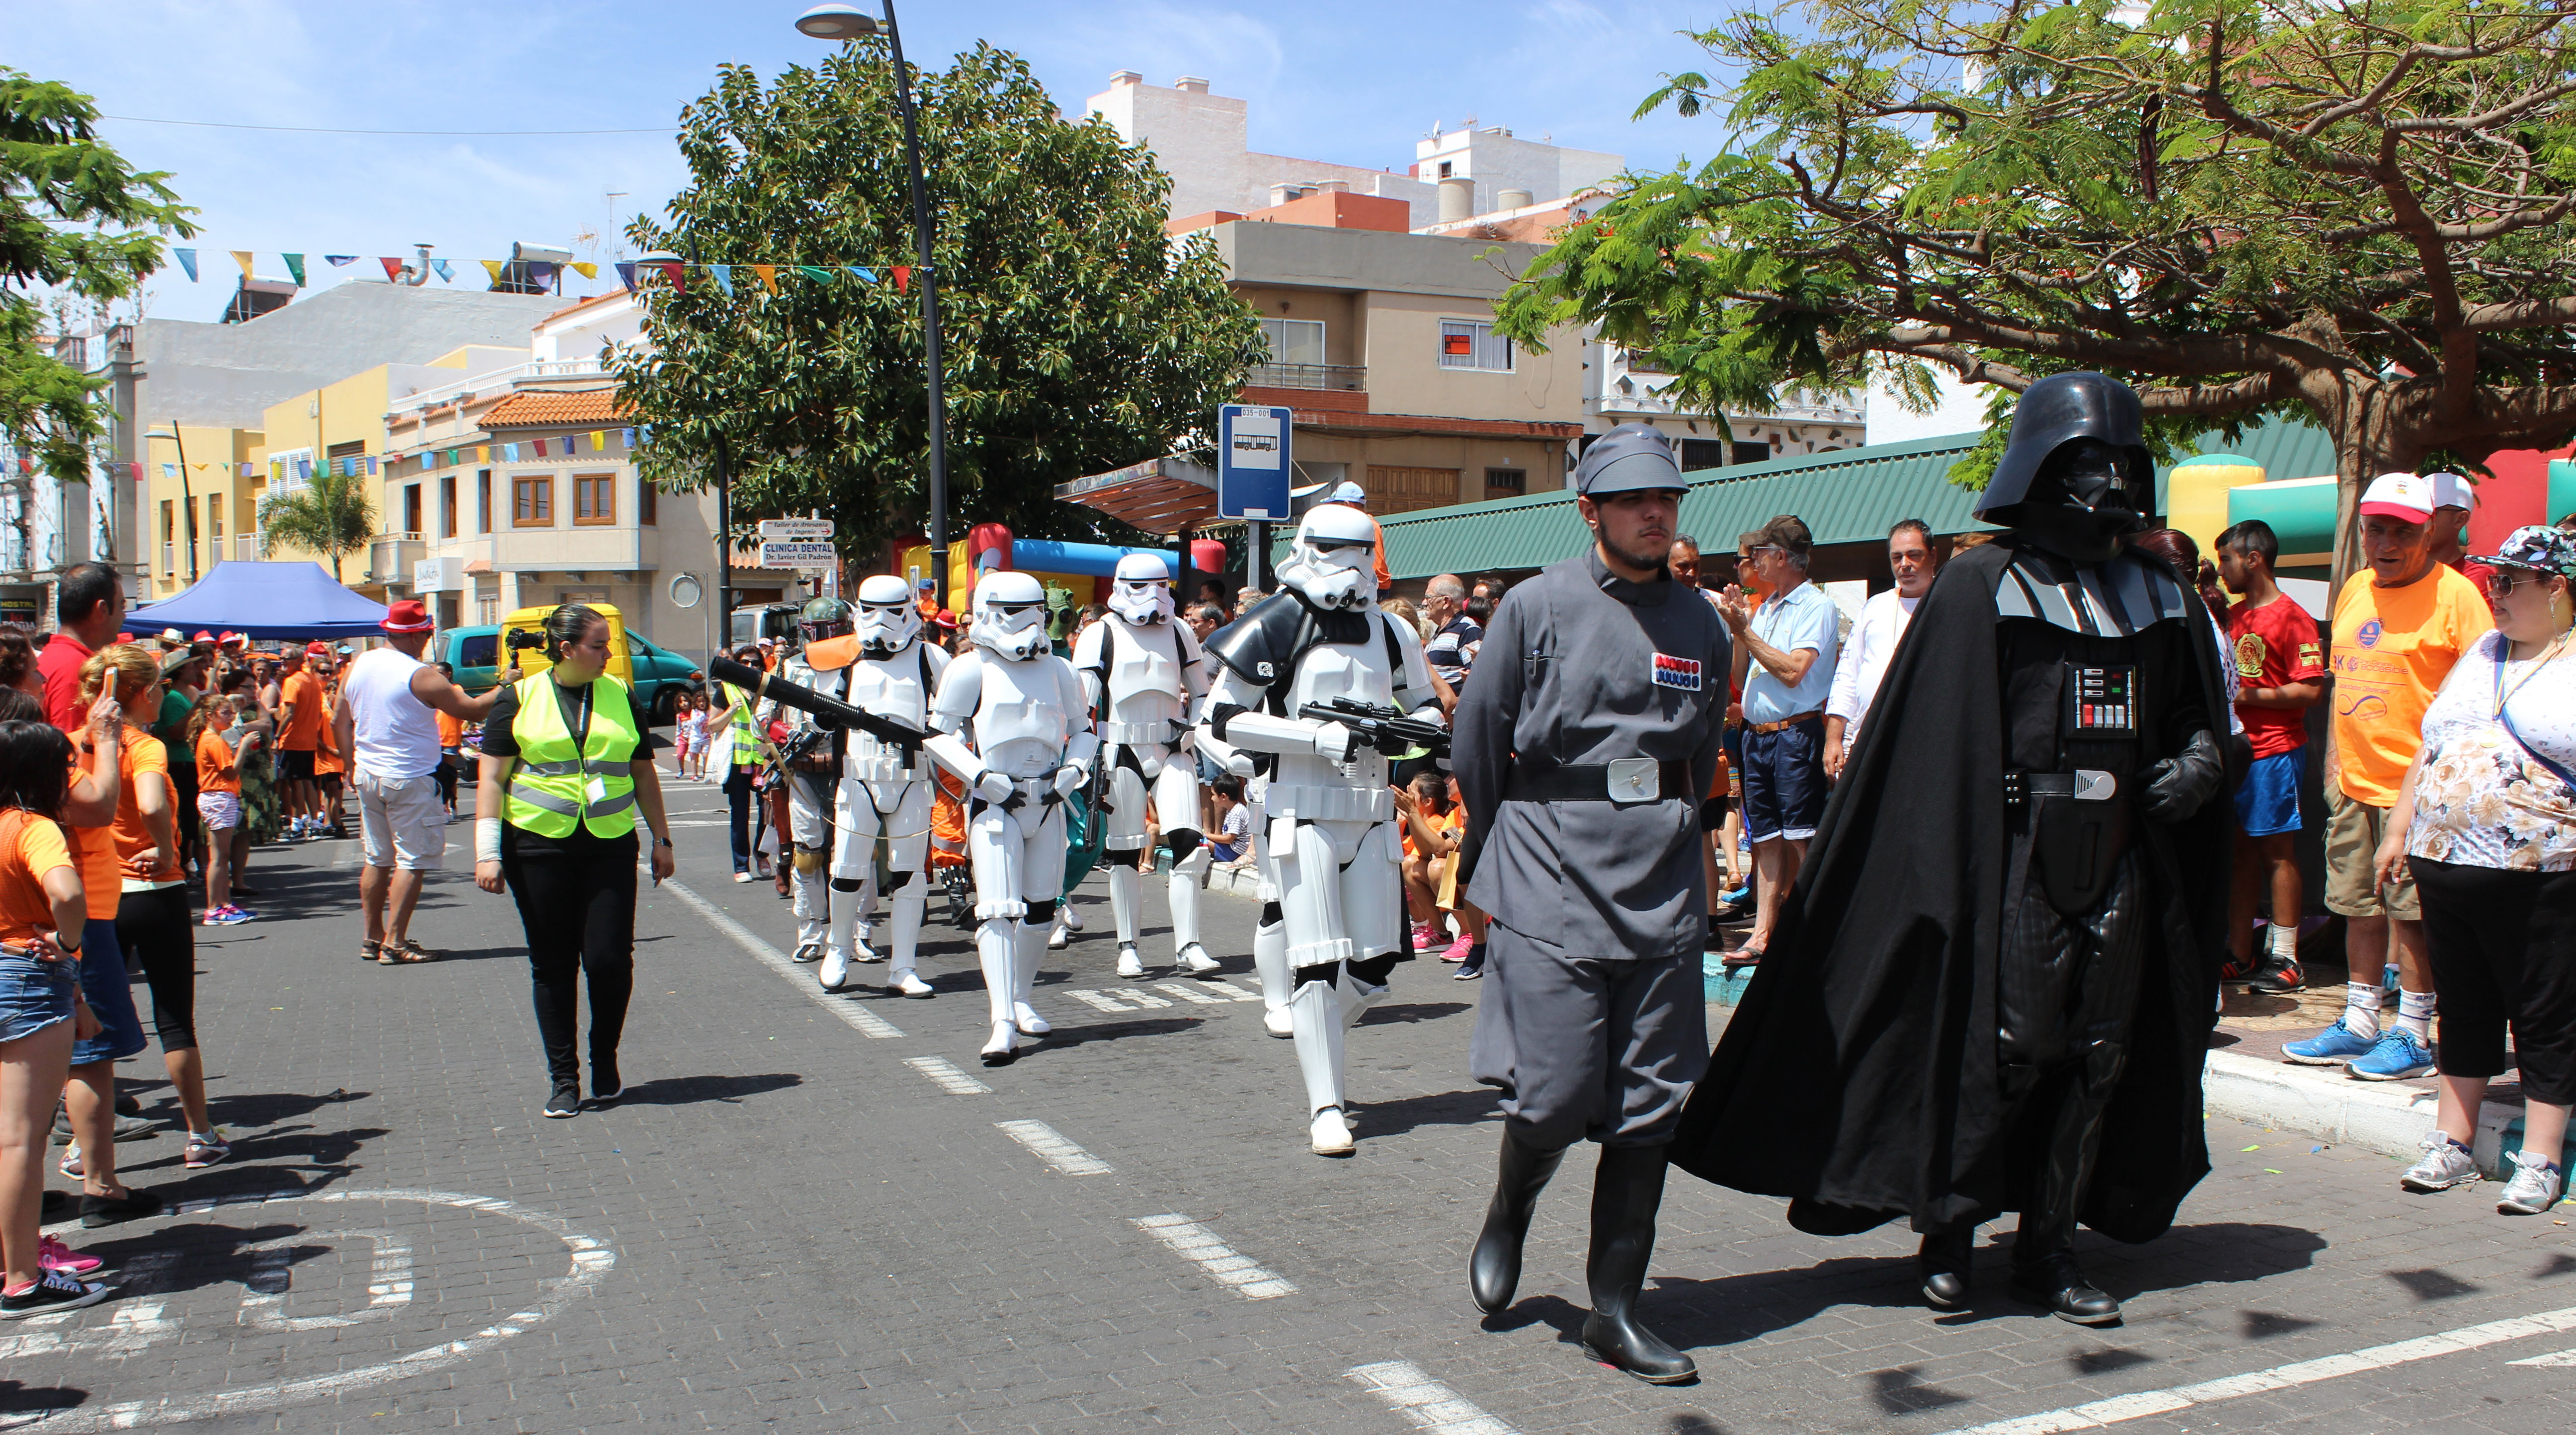 Star Wars Gran Canaria costume group